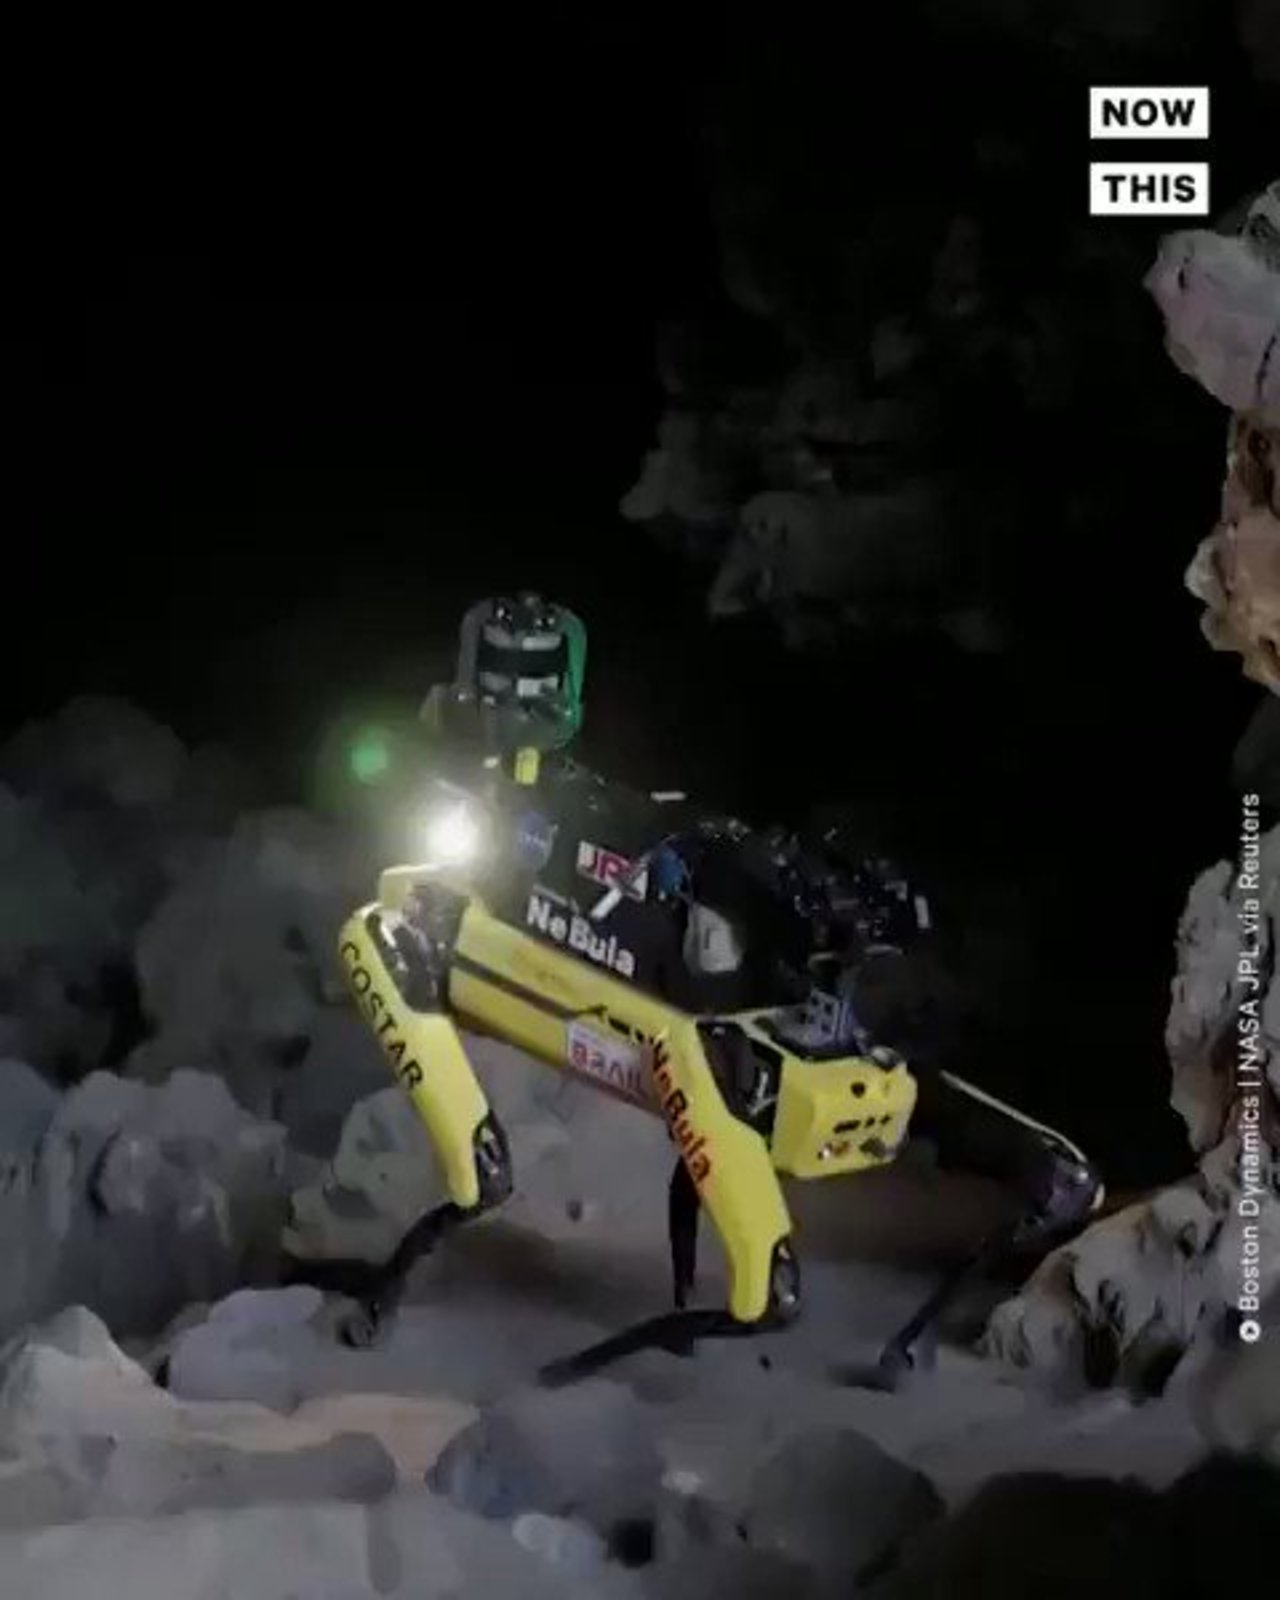 #Robot dog exploring harsh terrain without human guidance or GPS access by @nowthisnews @BostonDynamics #AI #BigData #MachineLearning #ArtificialIntelligence #Robotics #Automation #RPA #Tech #Innovation #ComputerVision Cc: @rudyagovic @dirkschaar @space_mog https://t.co/jpp9LS1du6